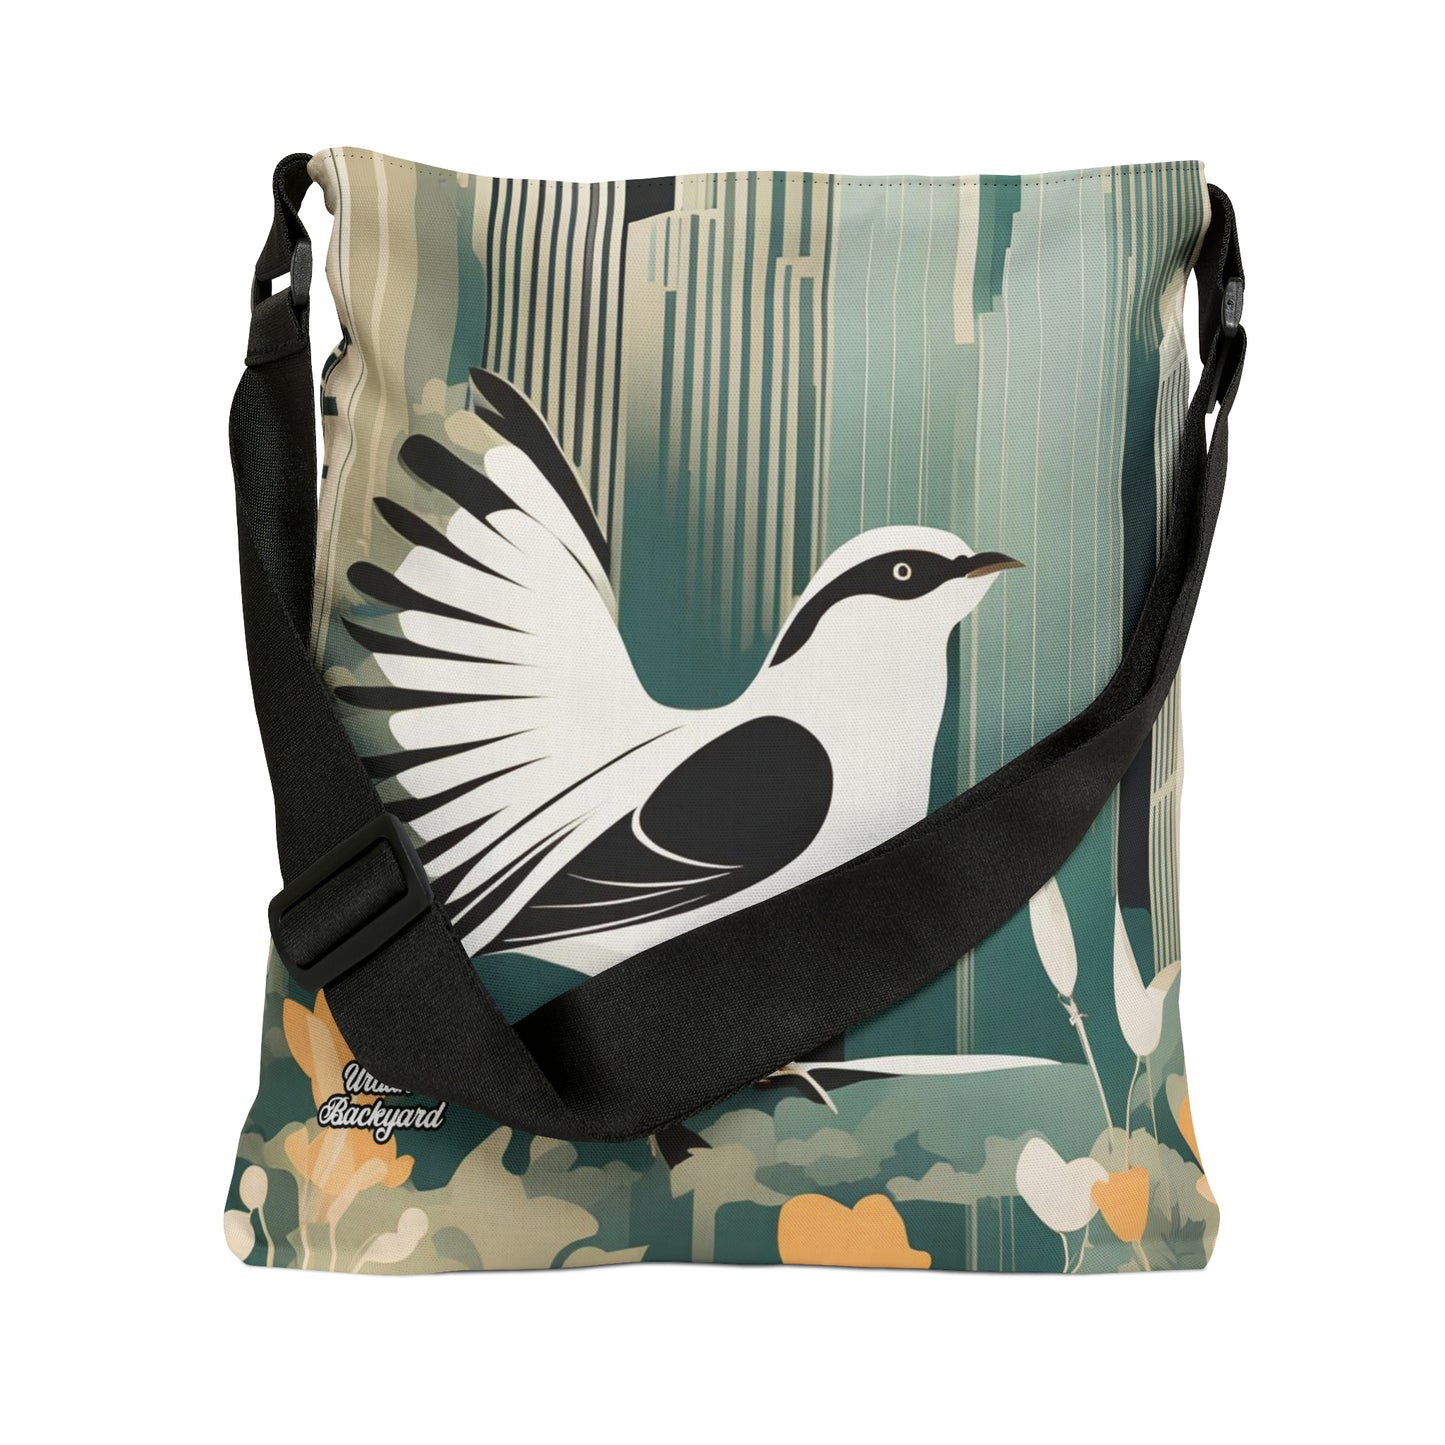 Urban Bird, Tote Bag with Adjustable Strap - Trendy and Versatile